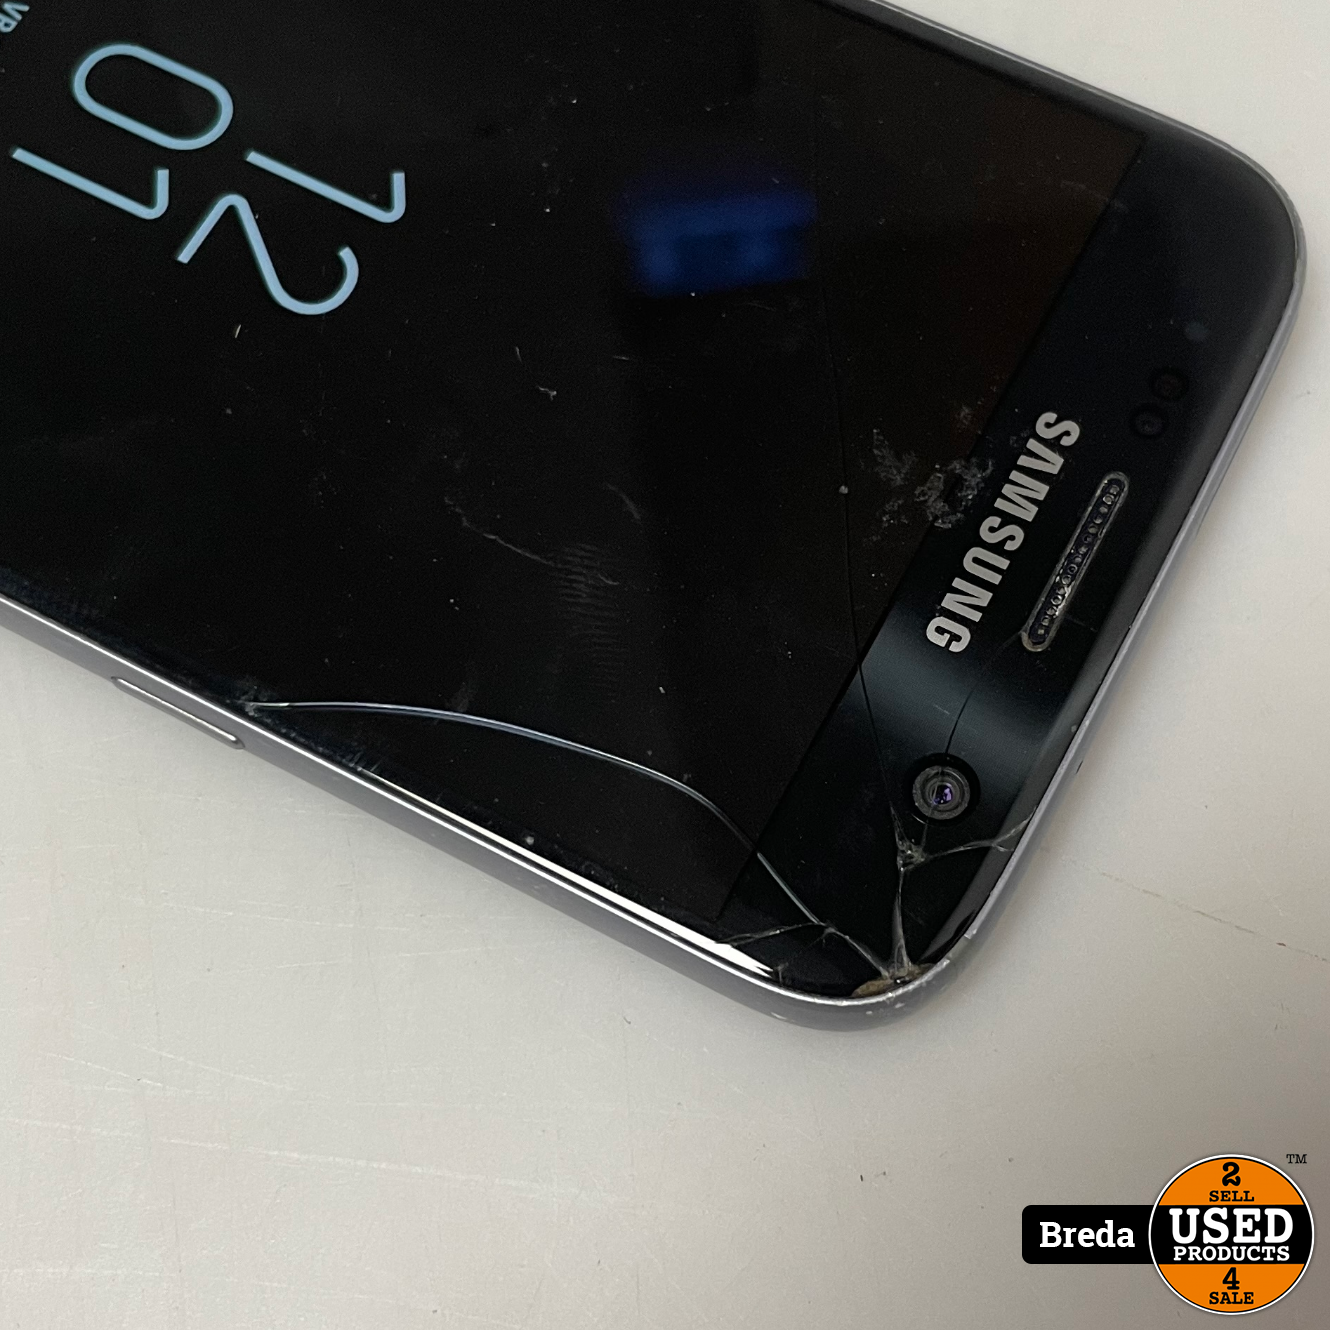 Samsung Galaxy S7 32GB | Met schade | In doos | Oude Android | Met garantie - Used Products Breda